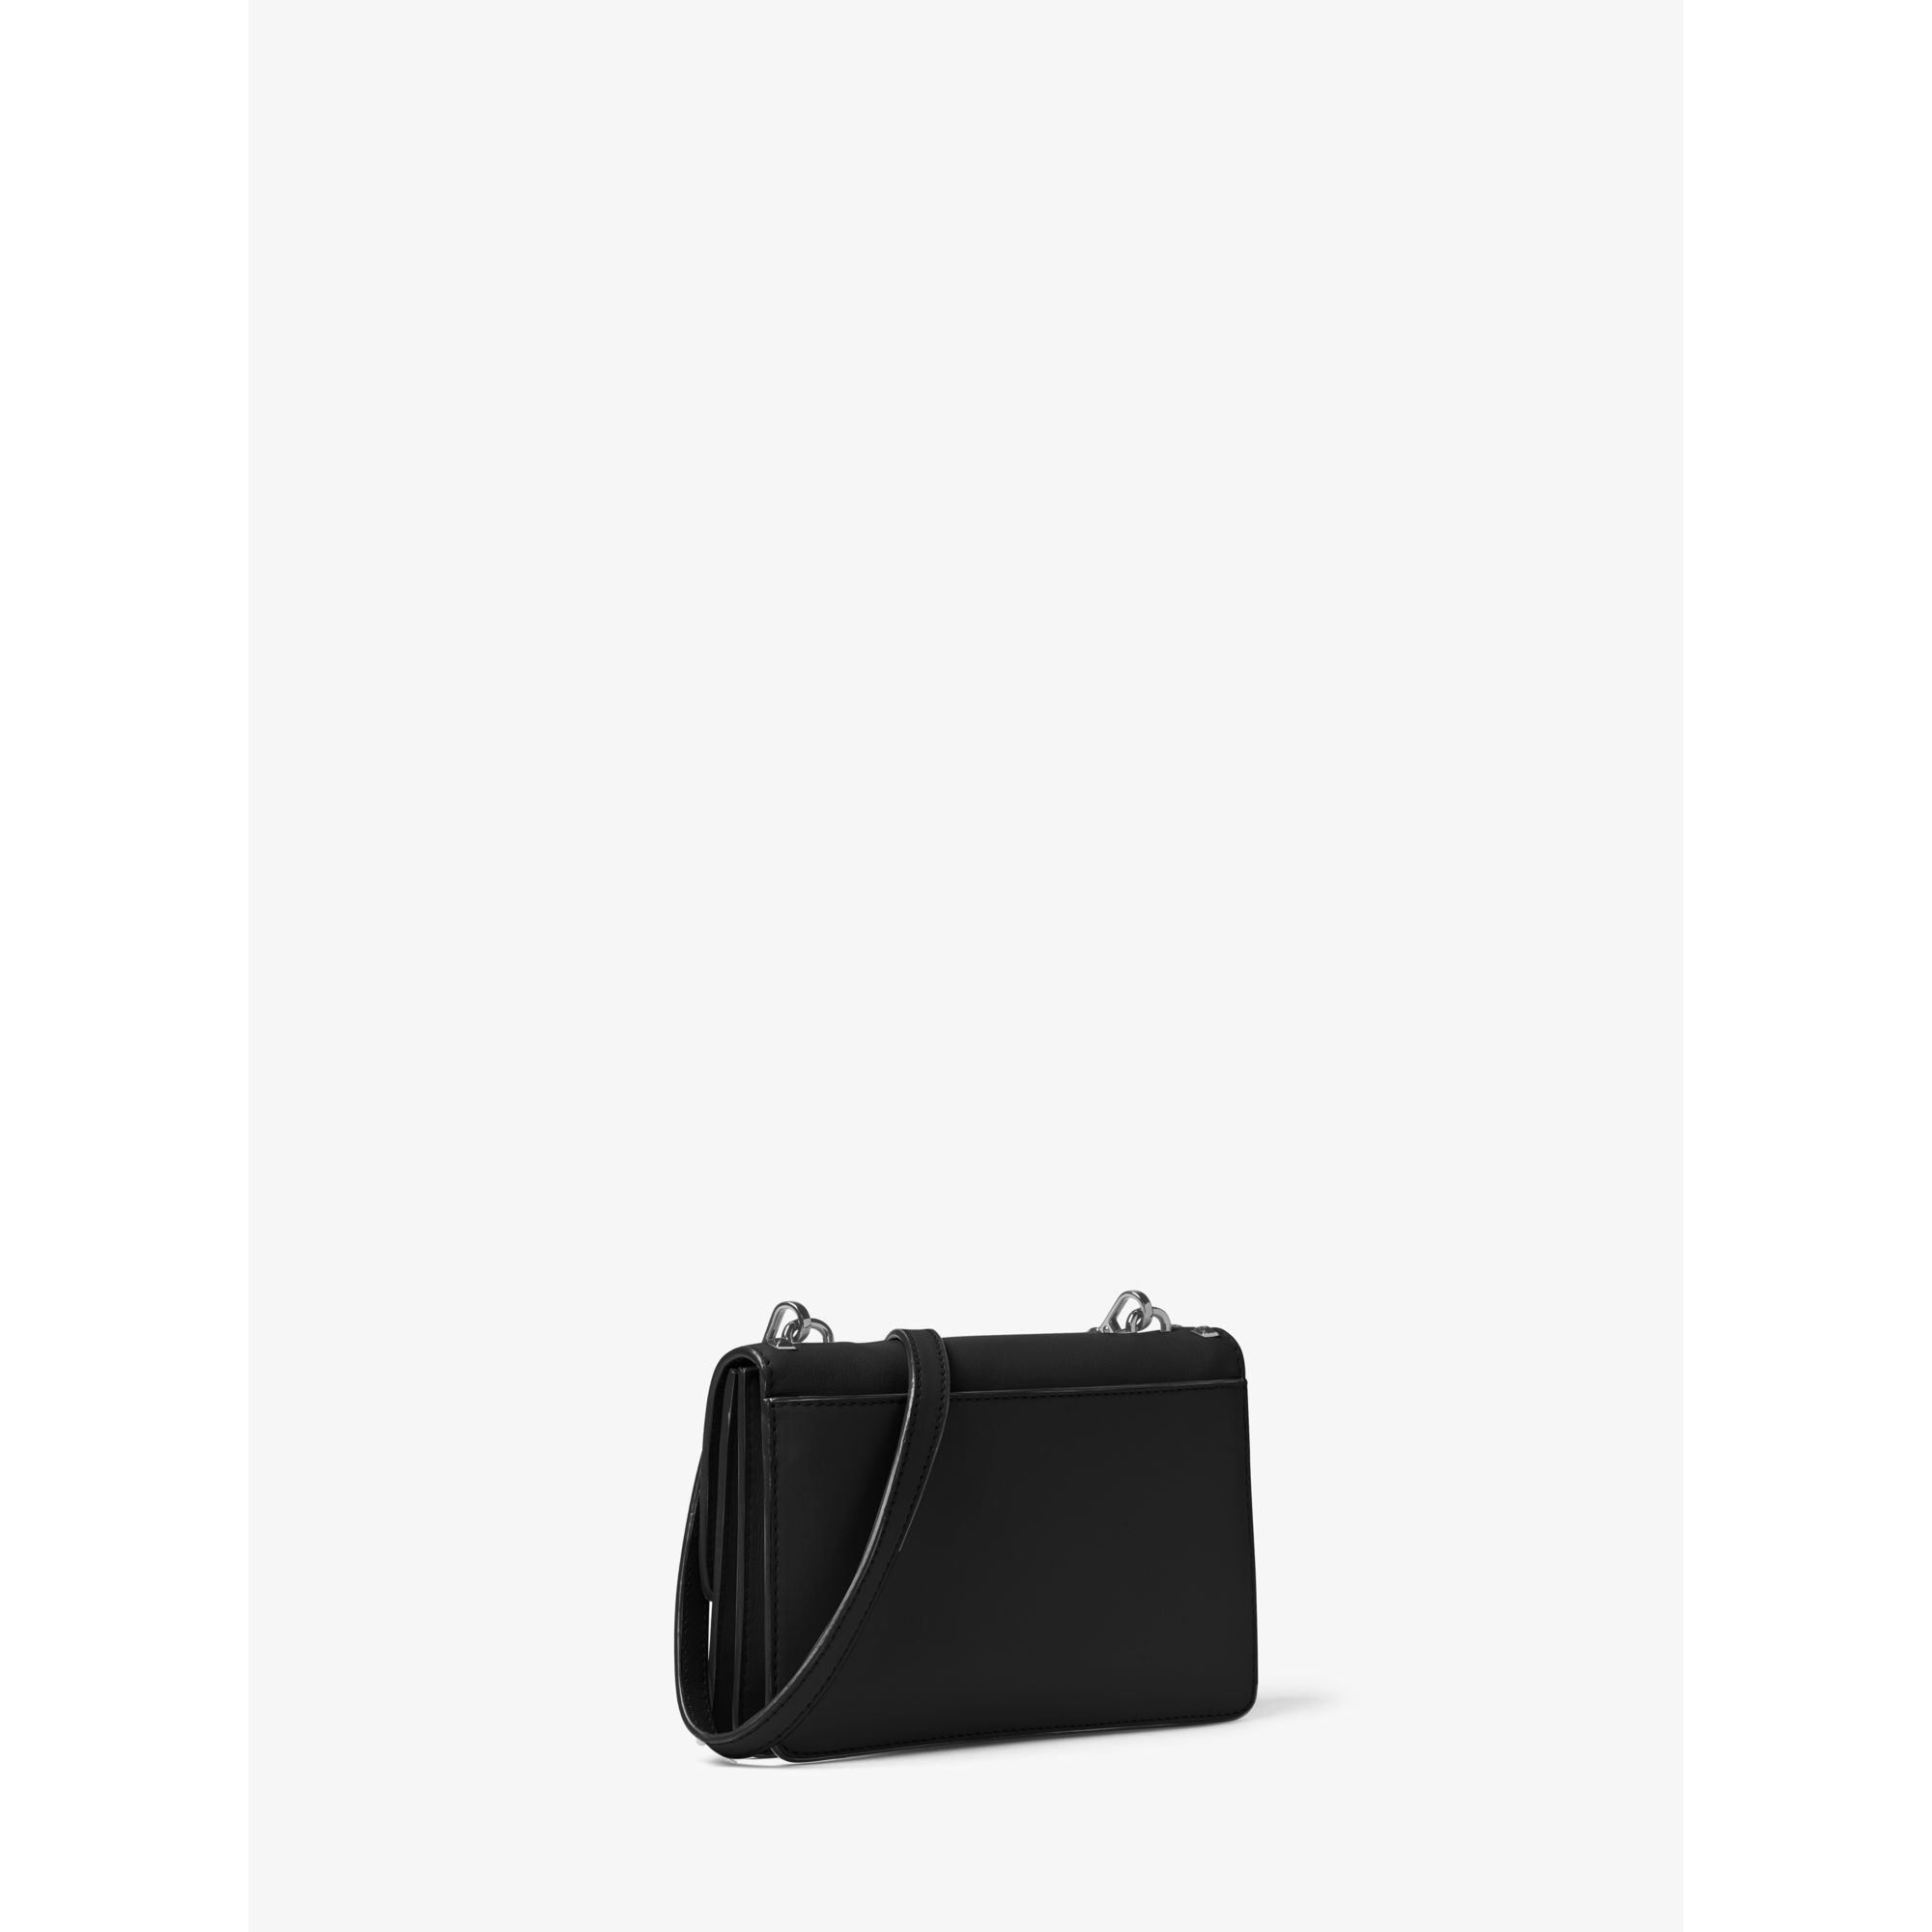 Michael Kors Sloan Small Studded Leather Crossbody Bag in Black - Lyst